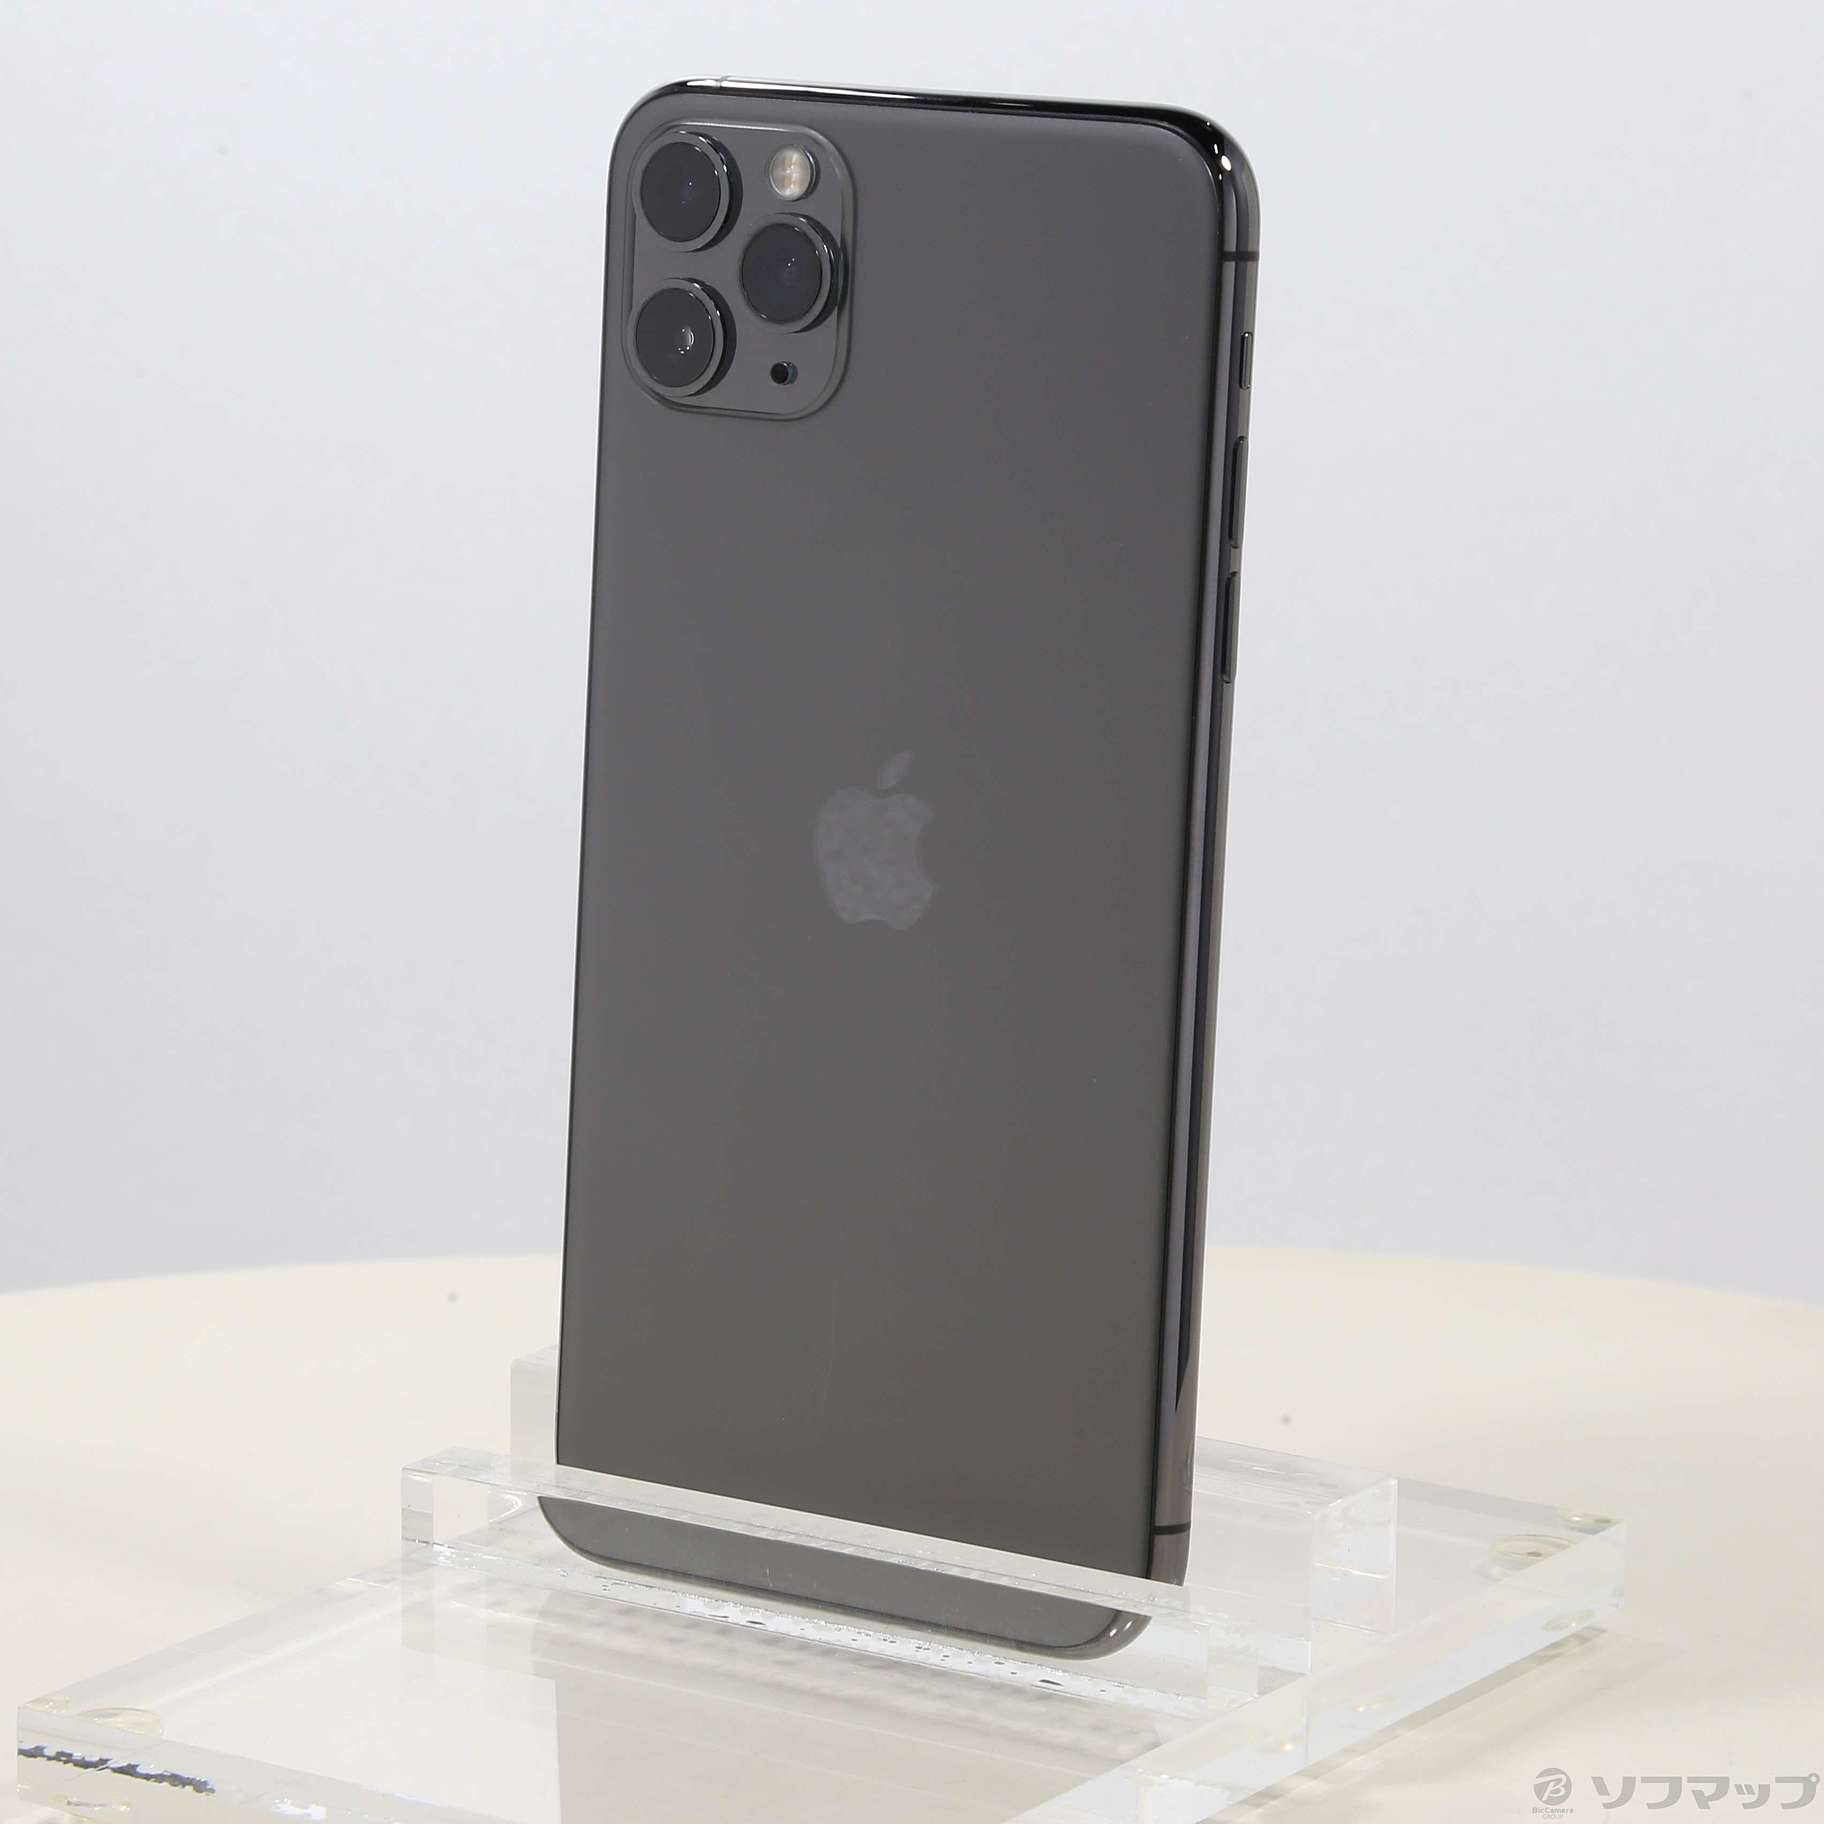 iPhone 11 Pro Max 256GB SIMフリー [スペースグレイ] 中古(白ロム ...